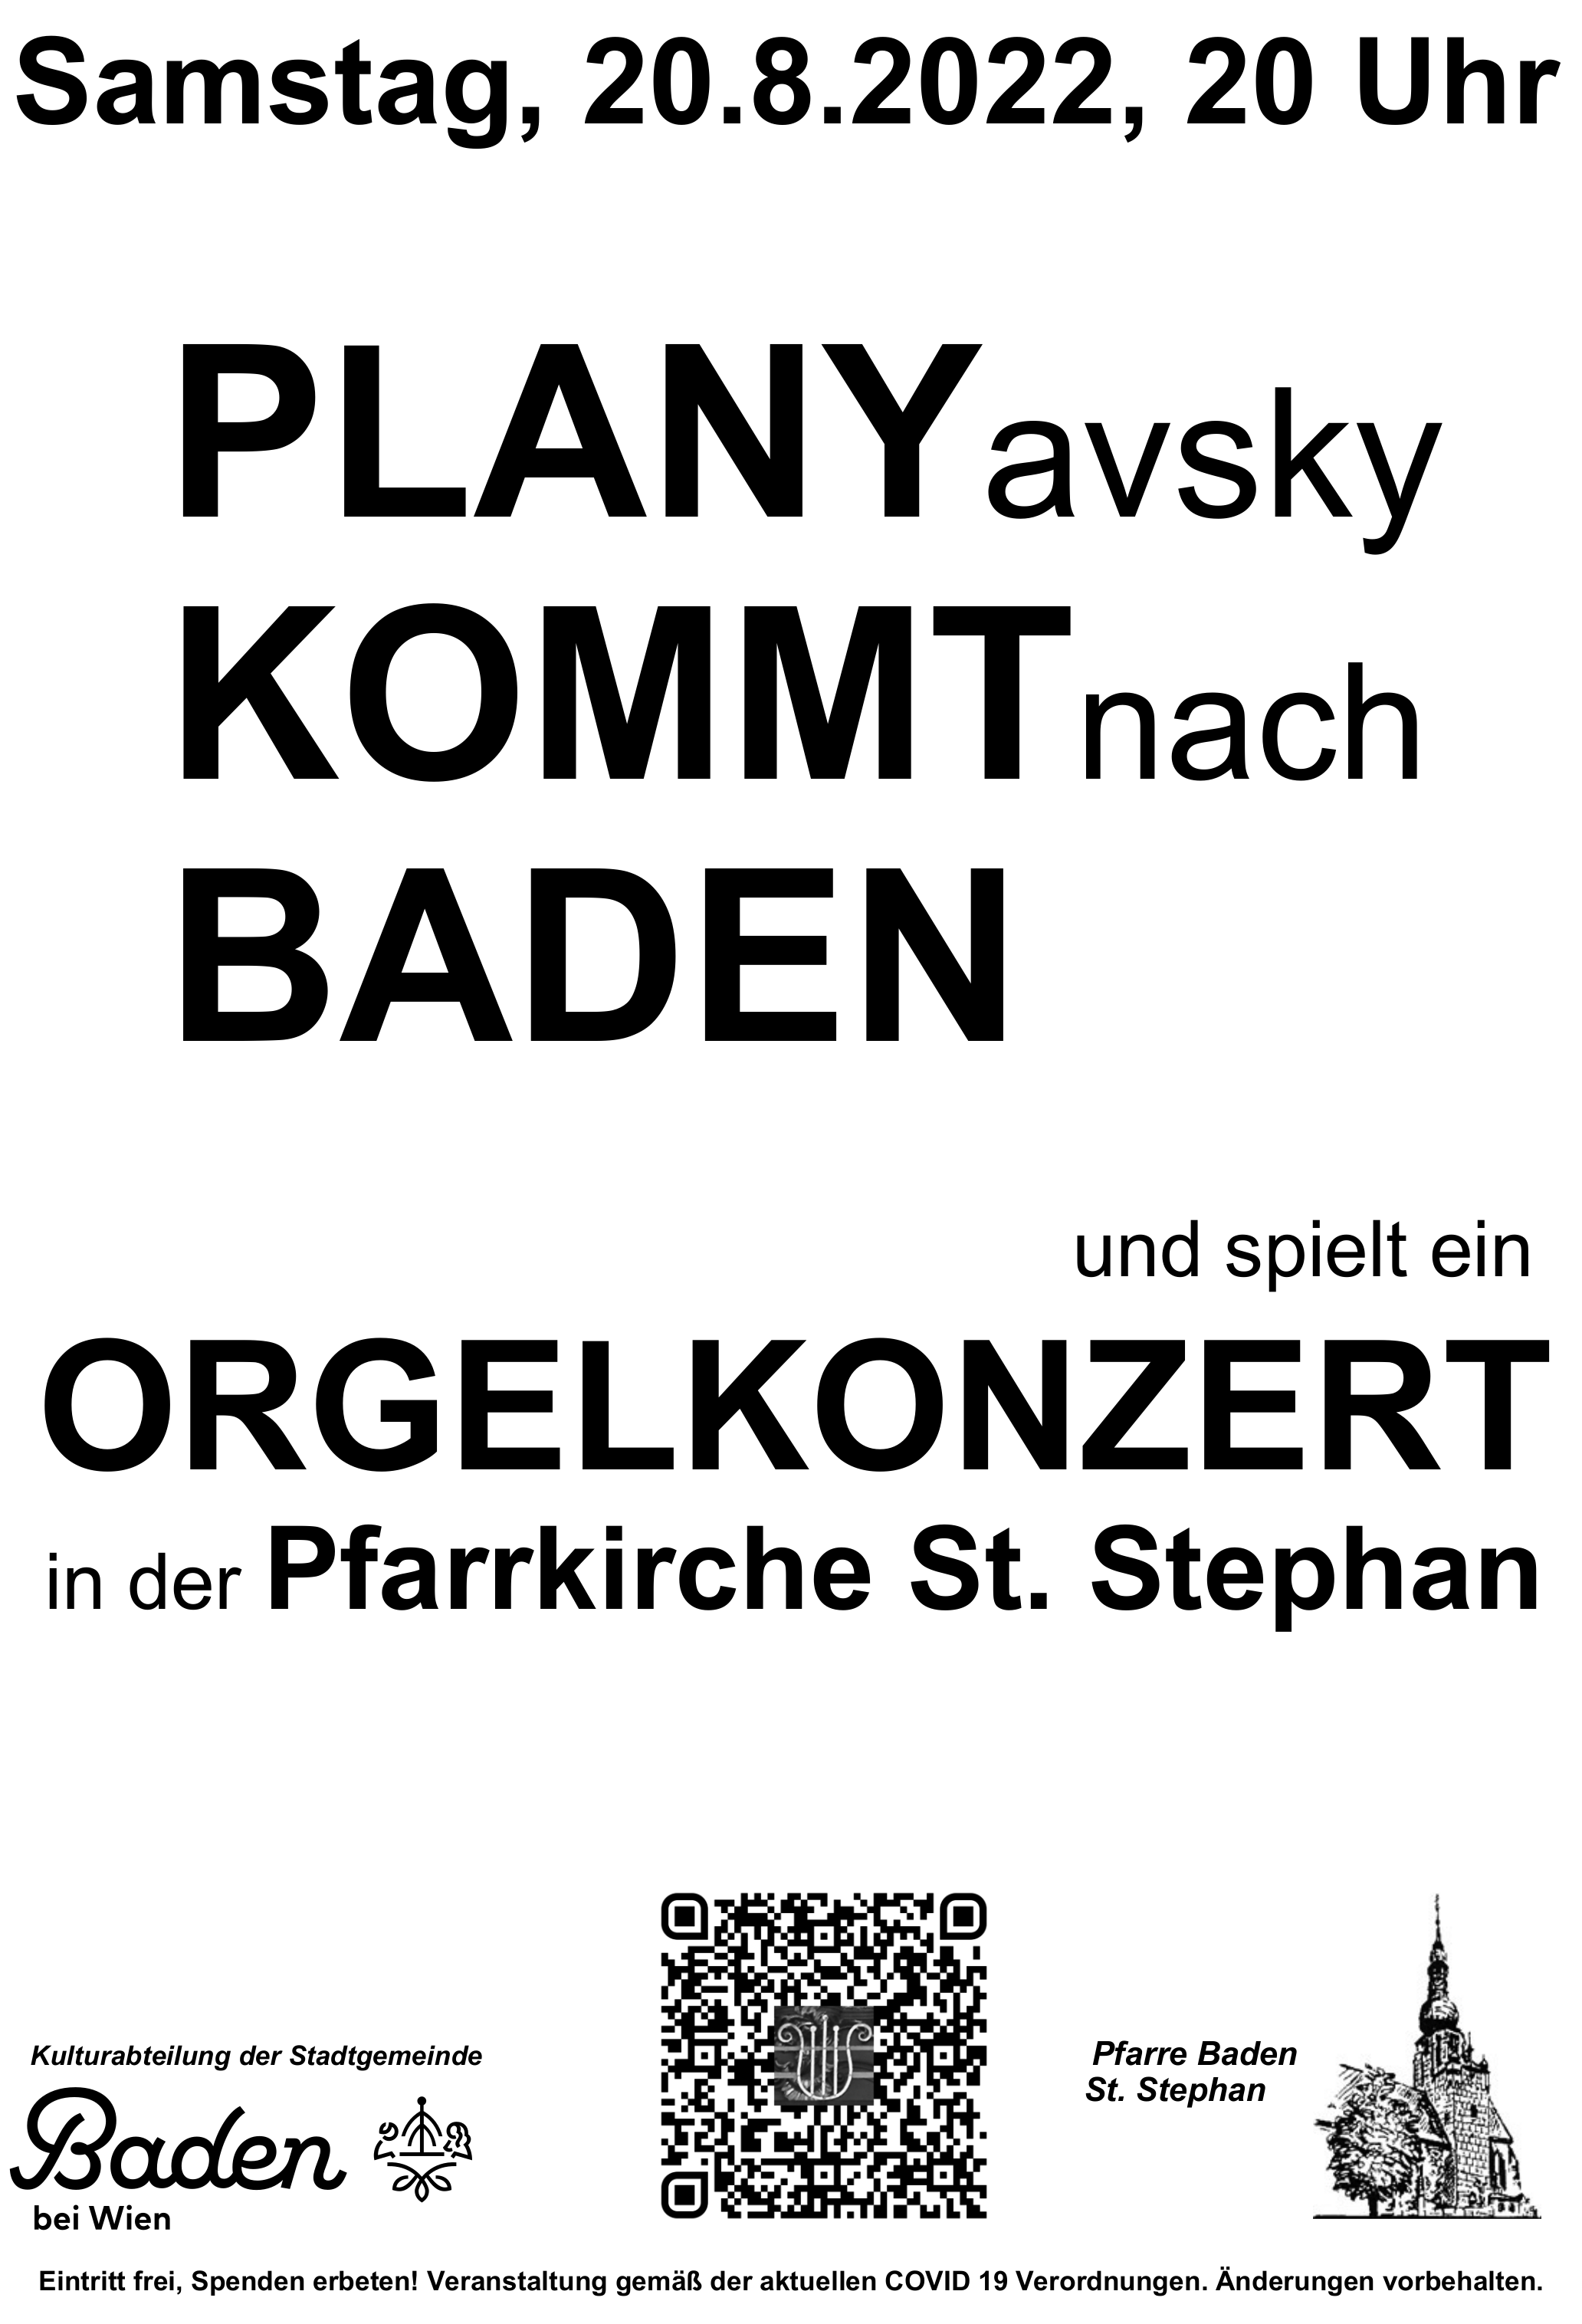 Plakat Orgelkonzert Planyavsky